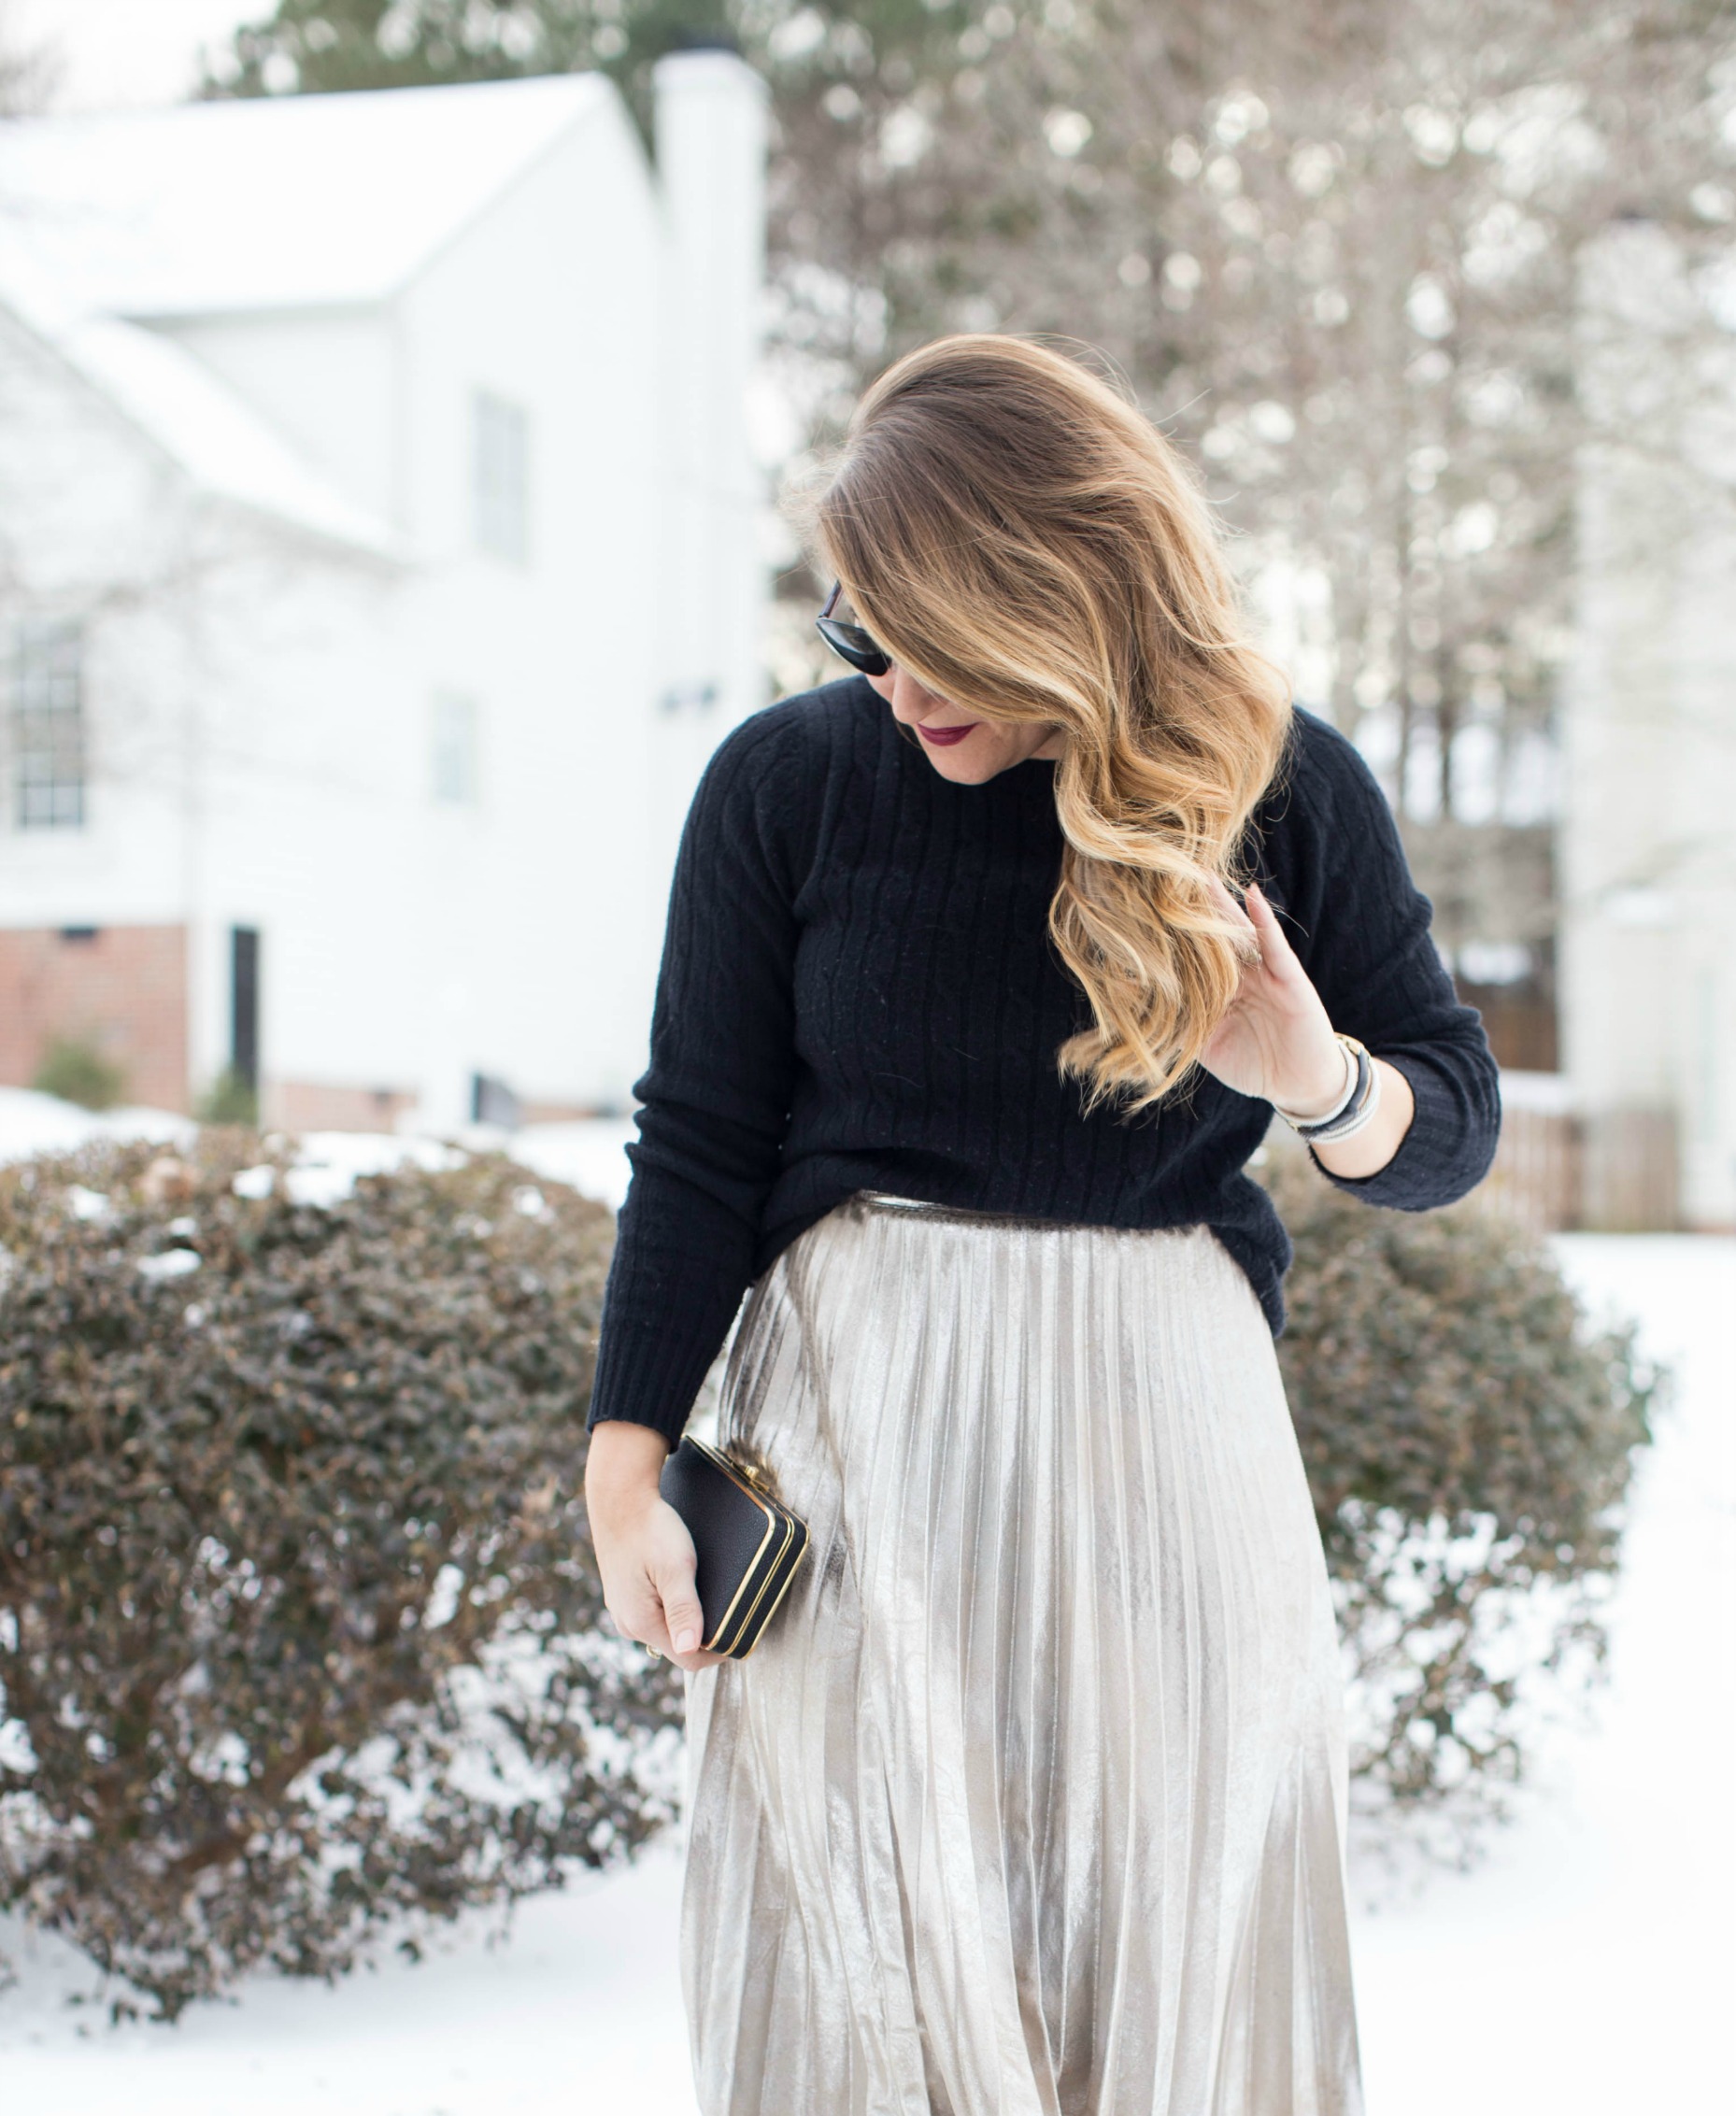 Pleated Metallic Skirt | Wearing Metallics after the holidays | coffeebeansandbobbypins.com | @Amy_cbandbp